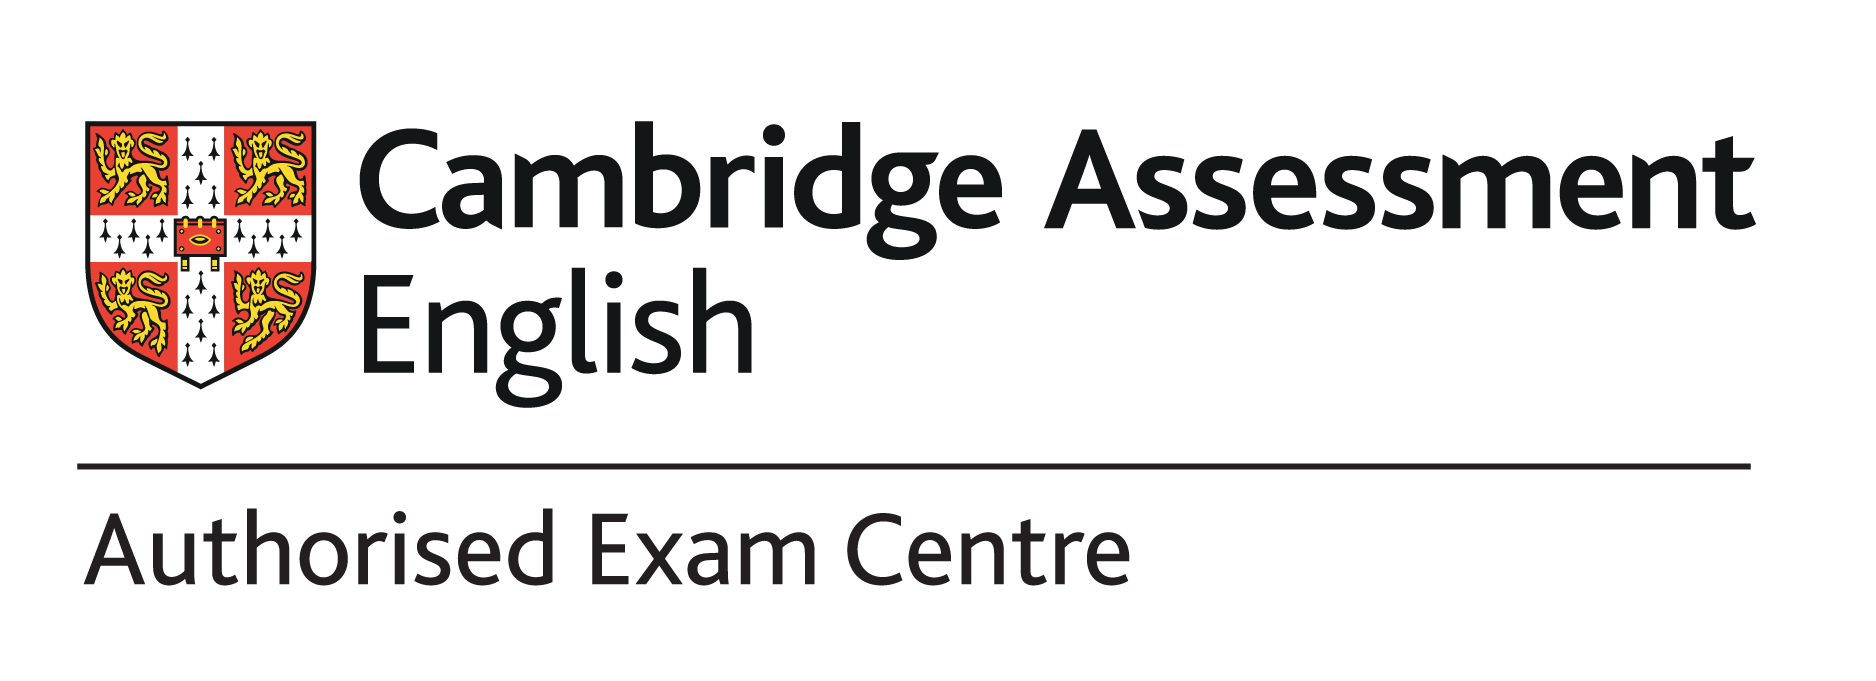 Authorised exam centre logo RGB.png